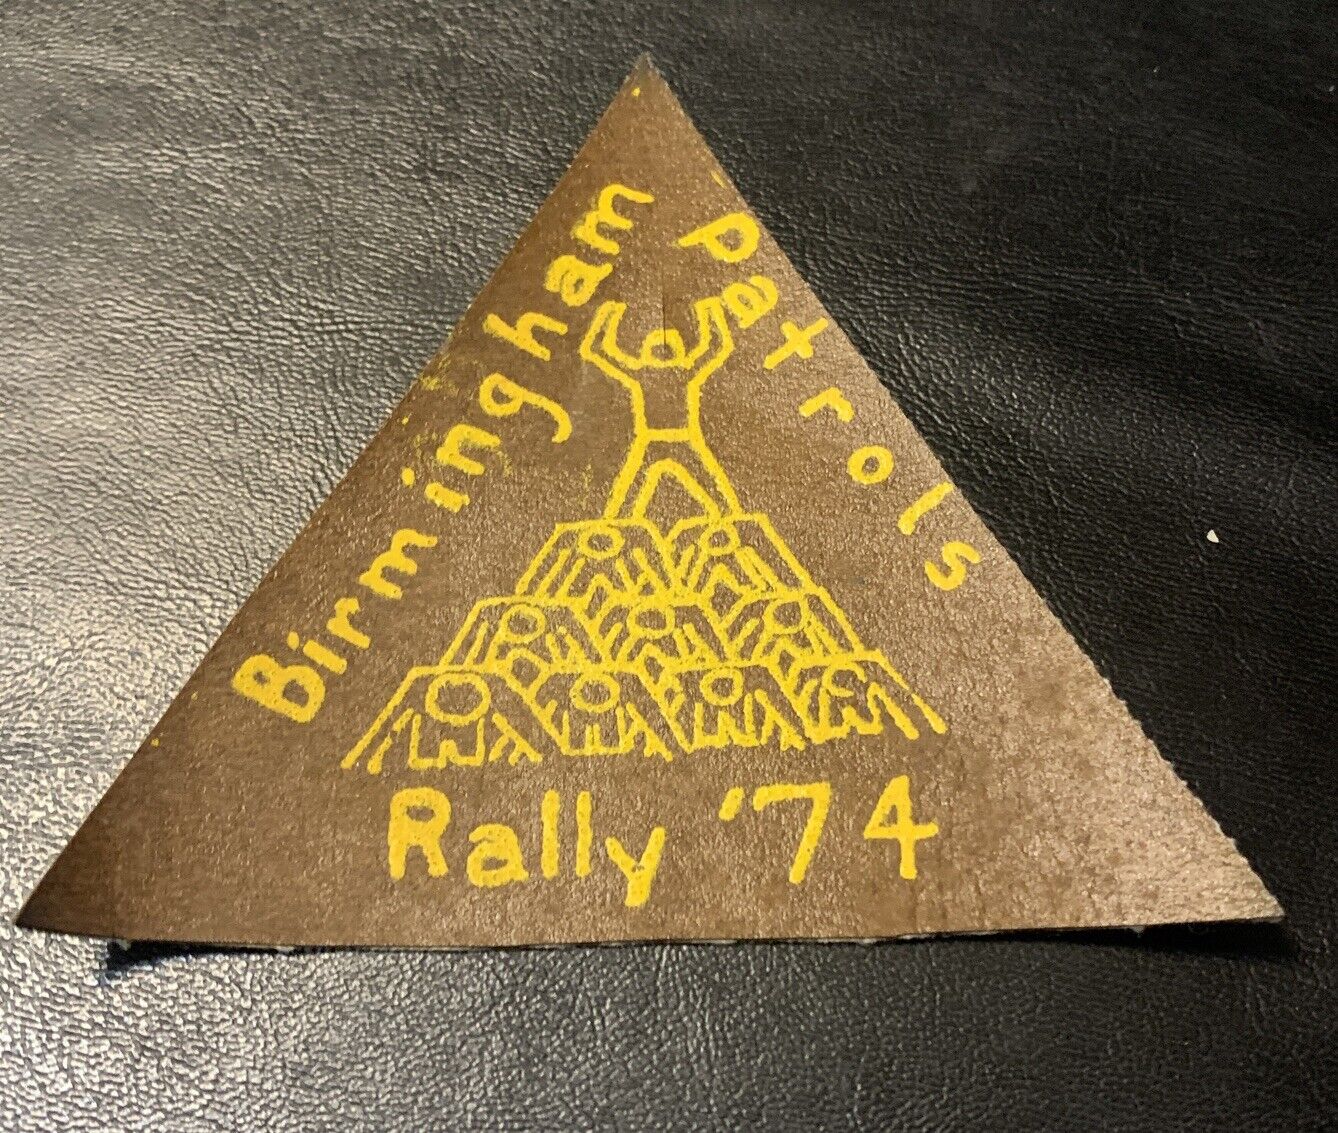 1974 Birmingham Patriots Rally Boy Scout Patch